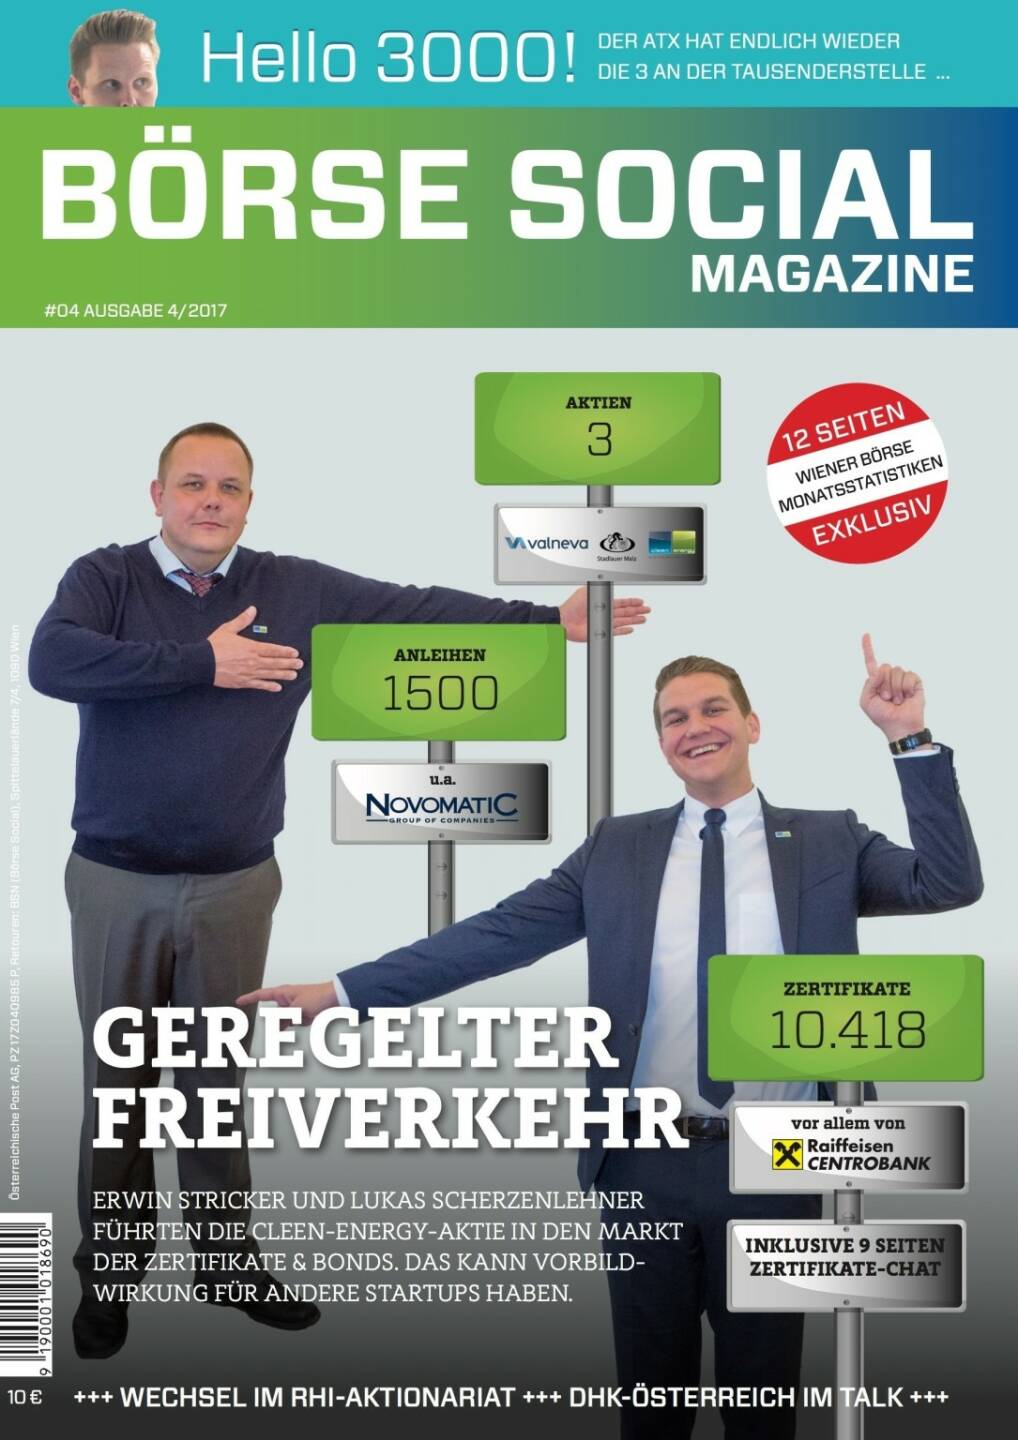 Börse Social Magazine #4